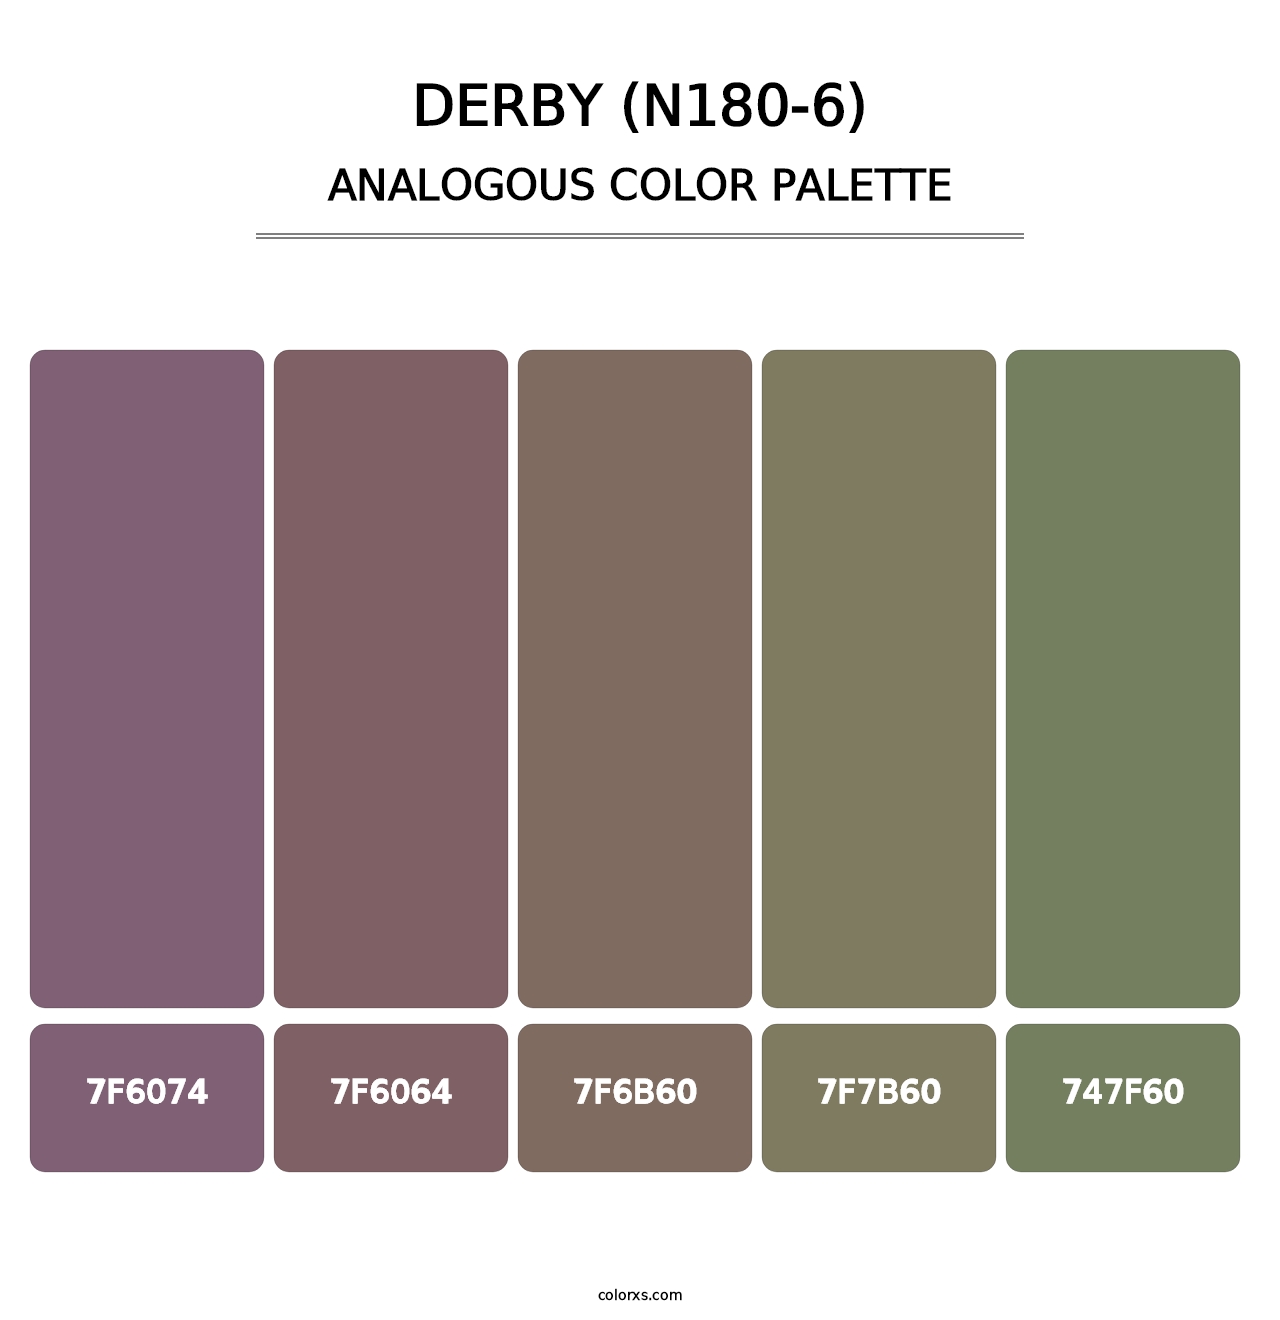 Derby (N180-6) - Analogous Color Palette